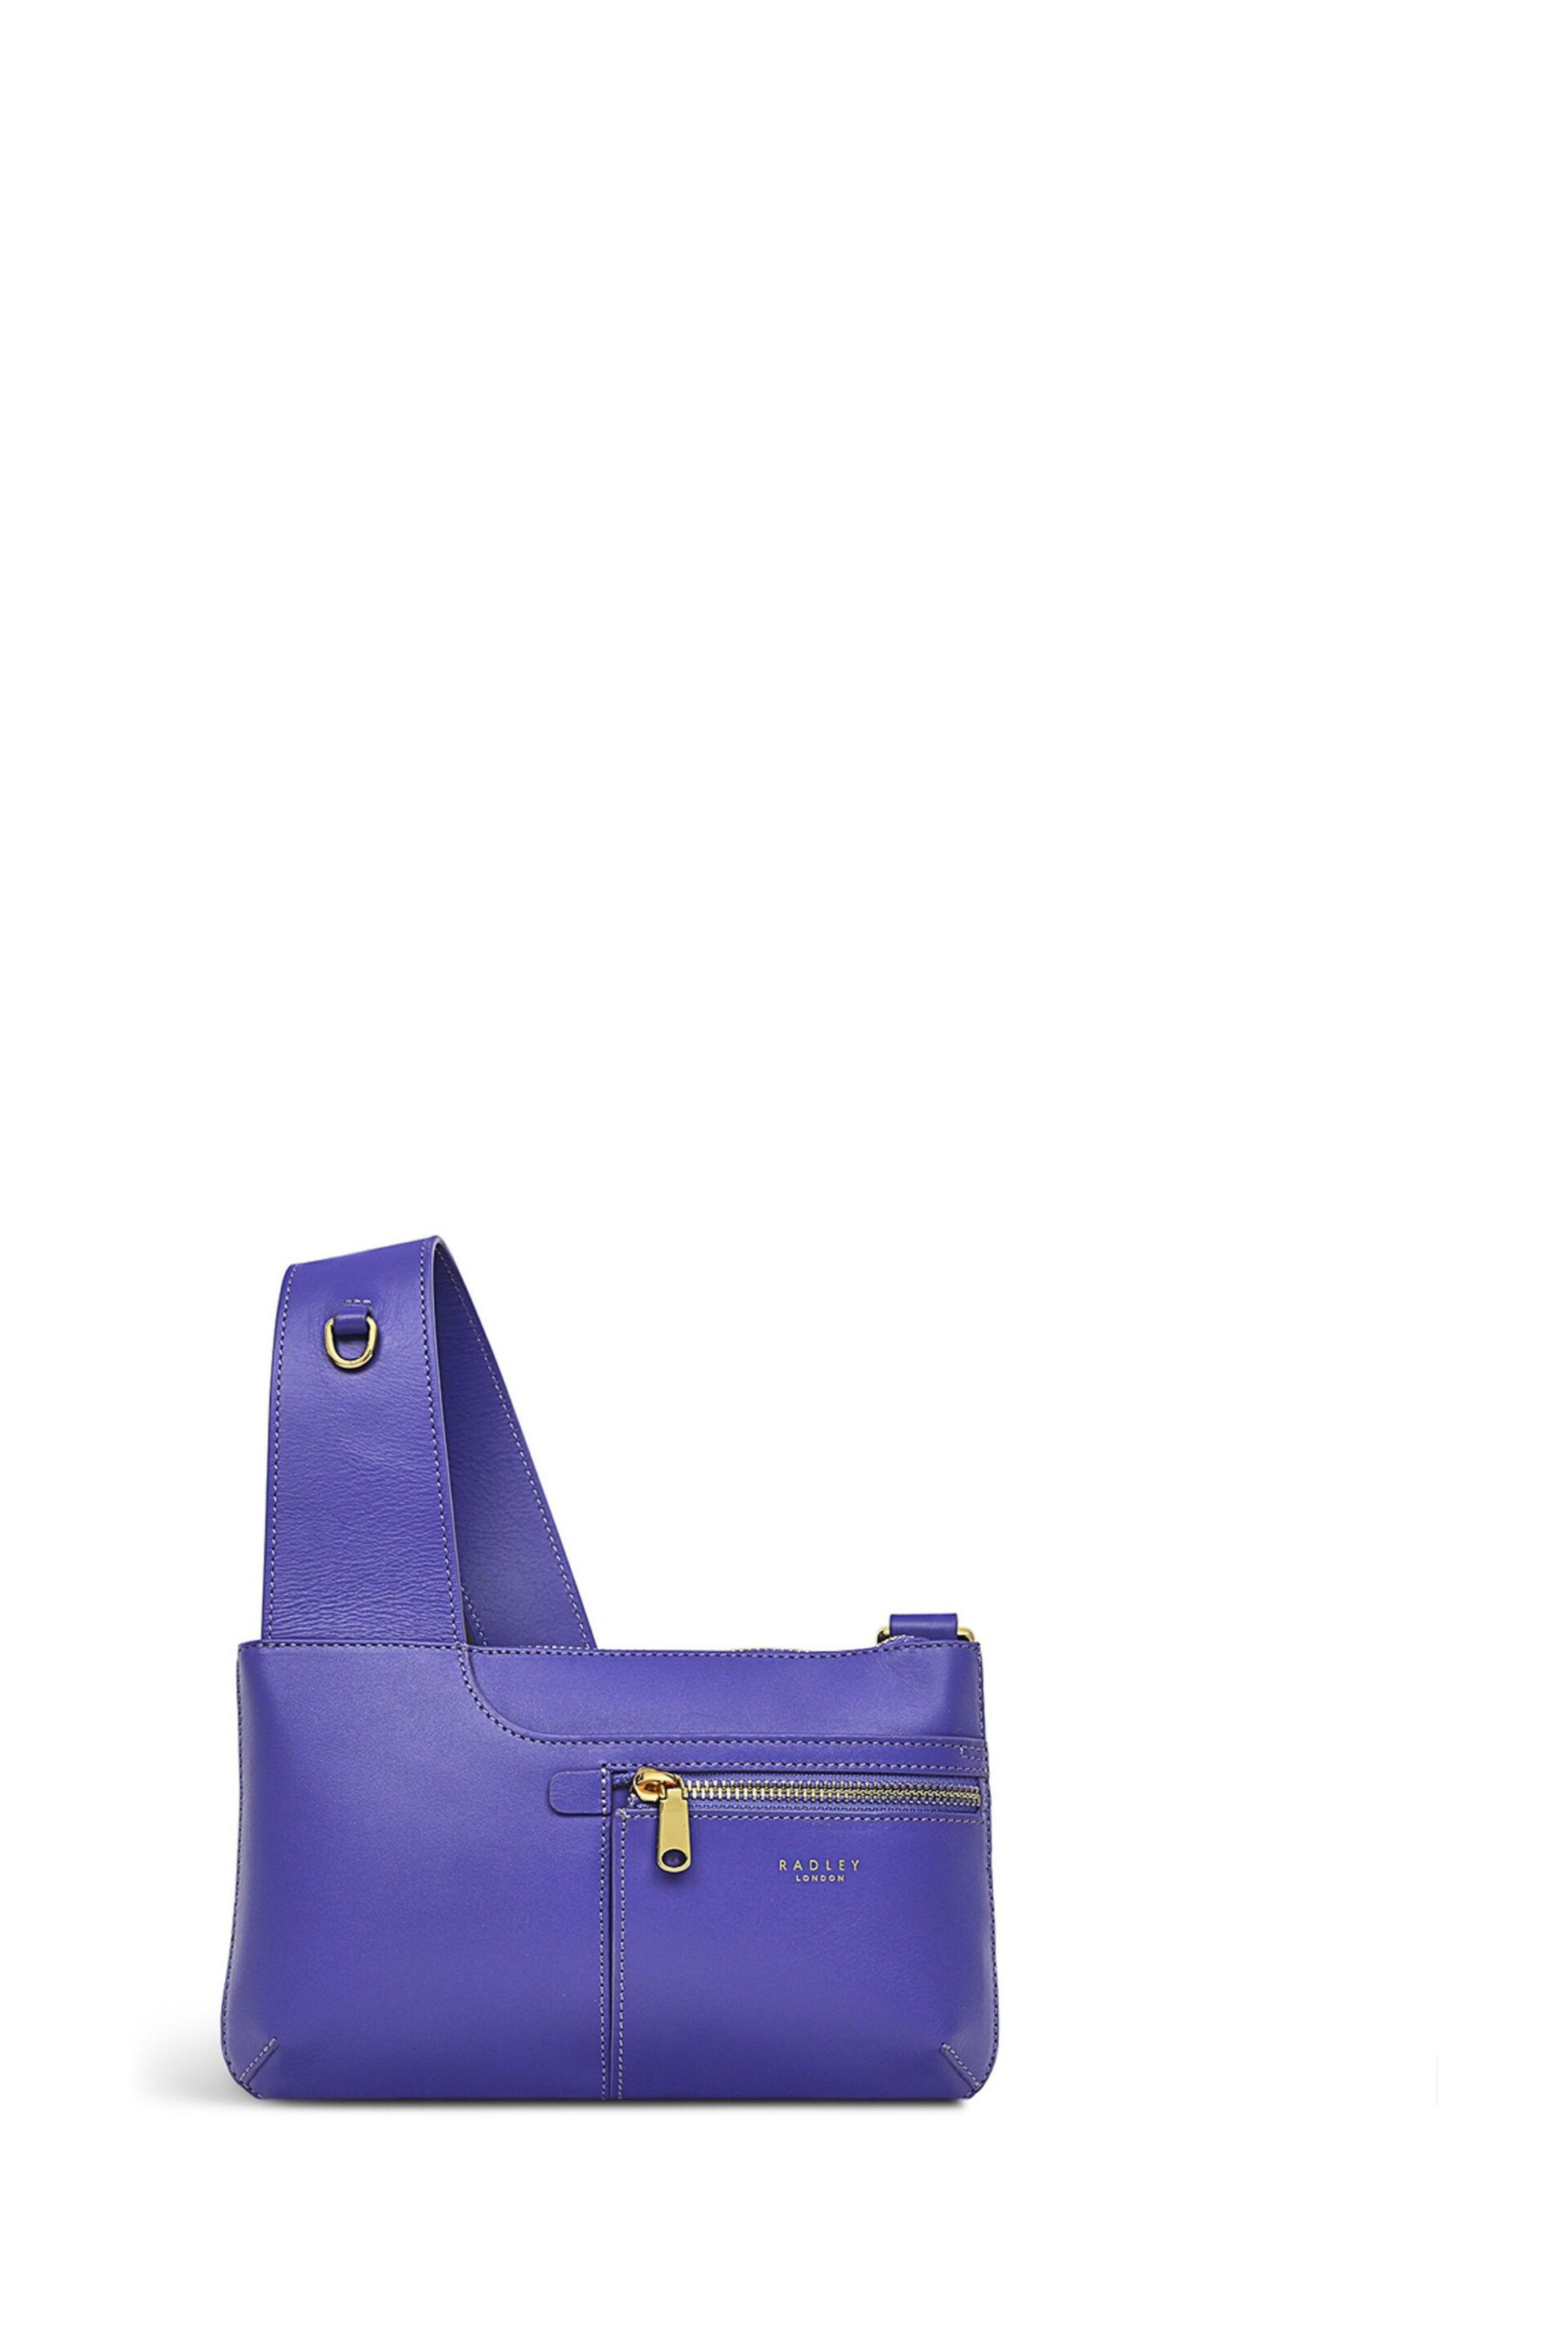 Radley London Purple Pockets Icon Mini Zip-Top Cross-Body Bag - Image 2 of 5